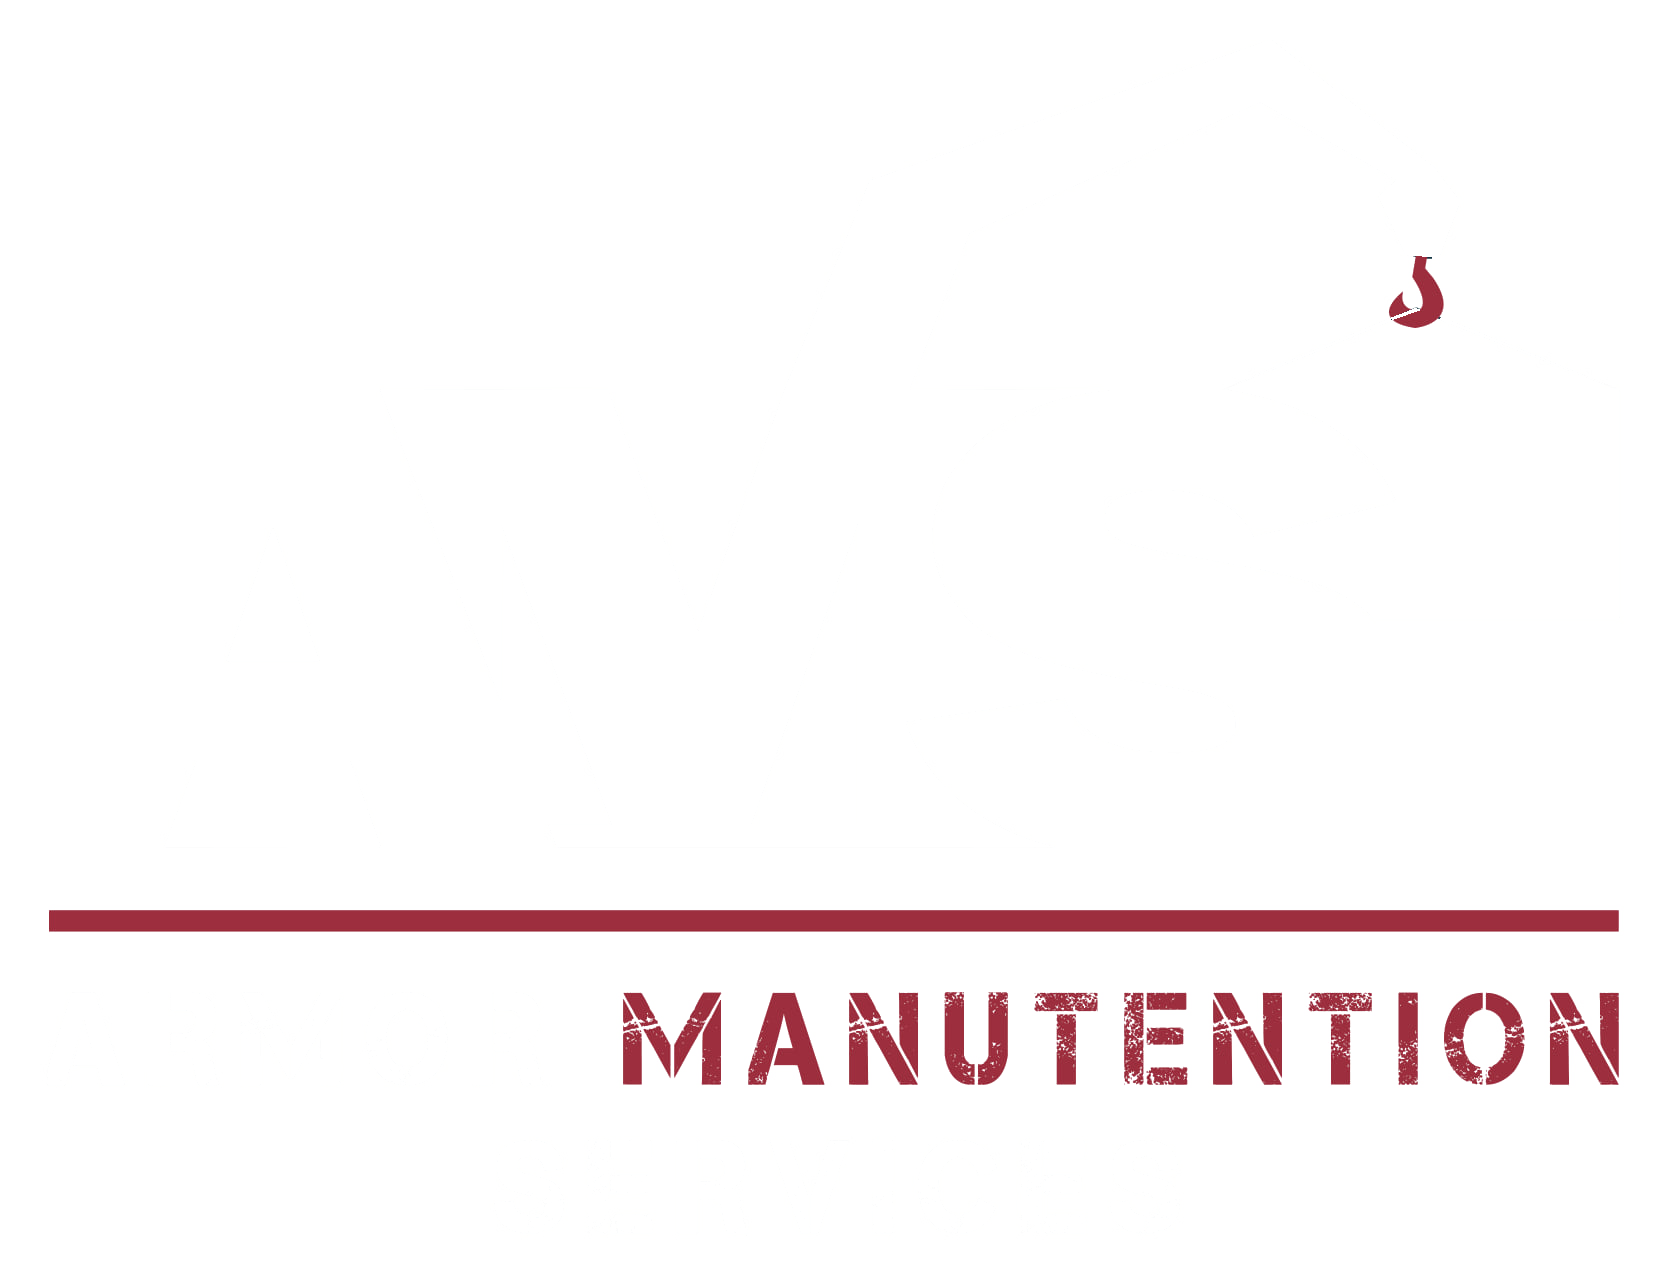 Armor Manutention Services Levage Manutention Industrielle Finistère